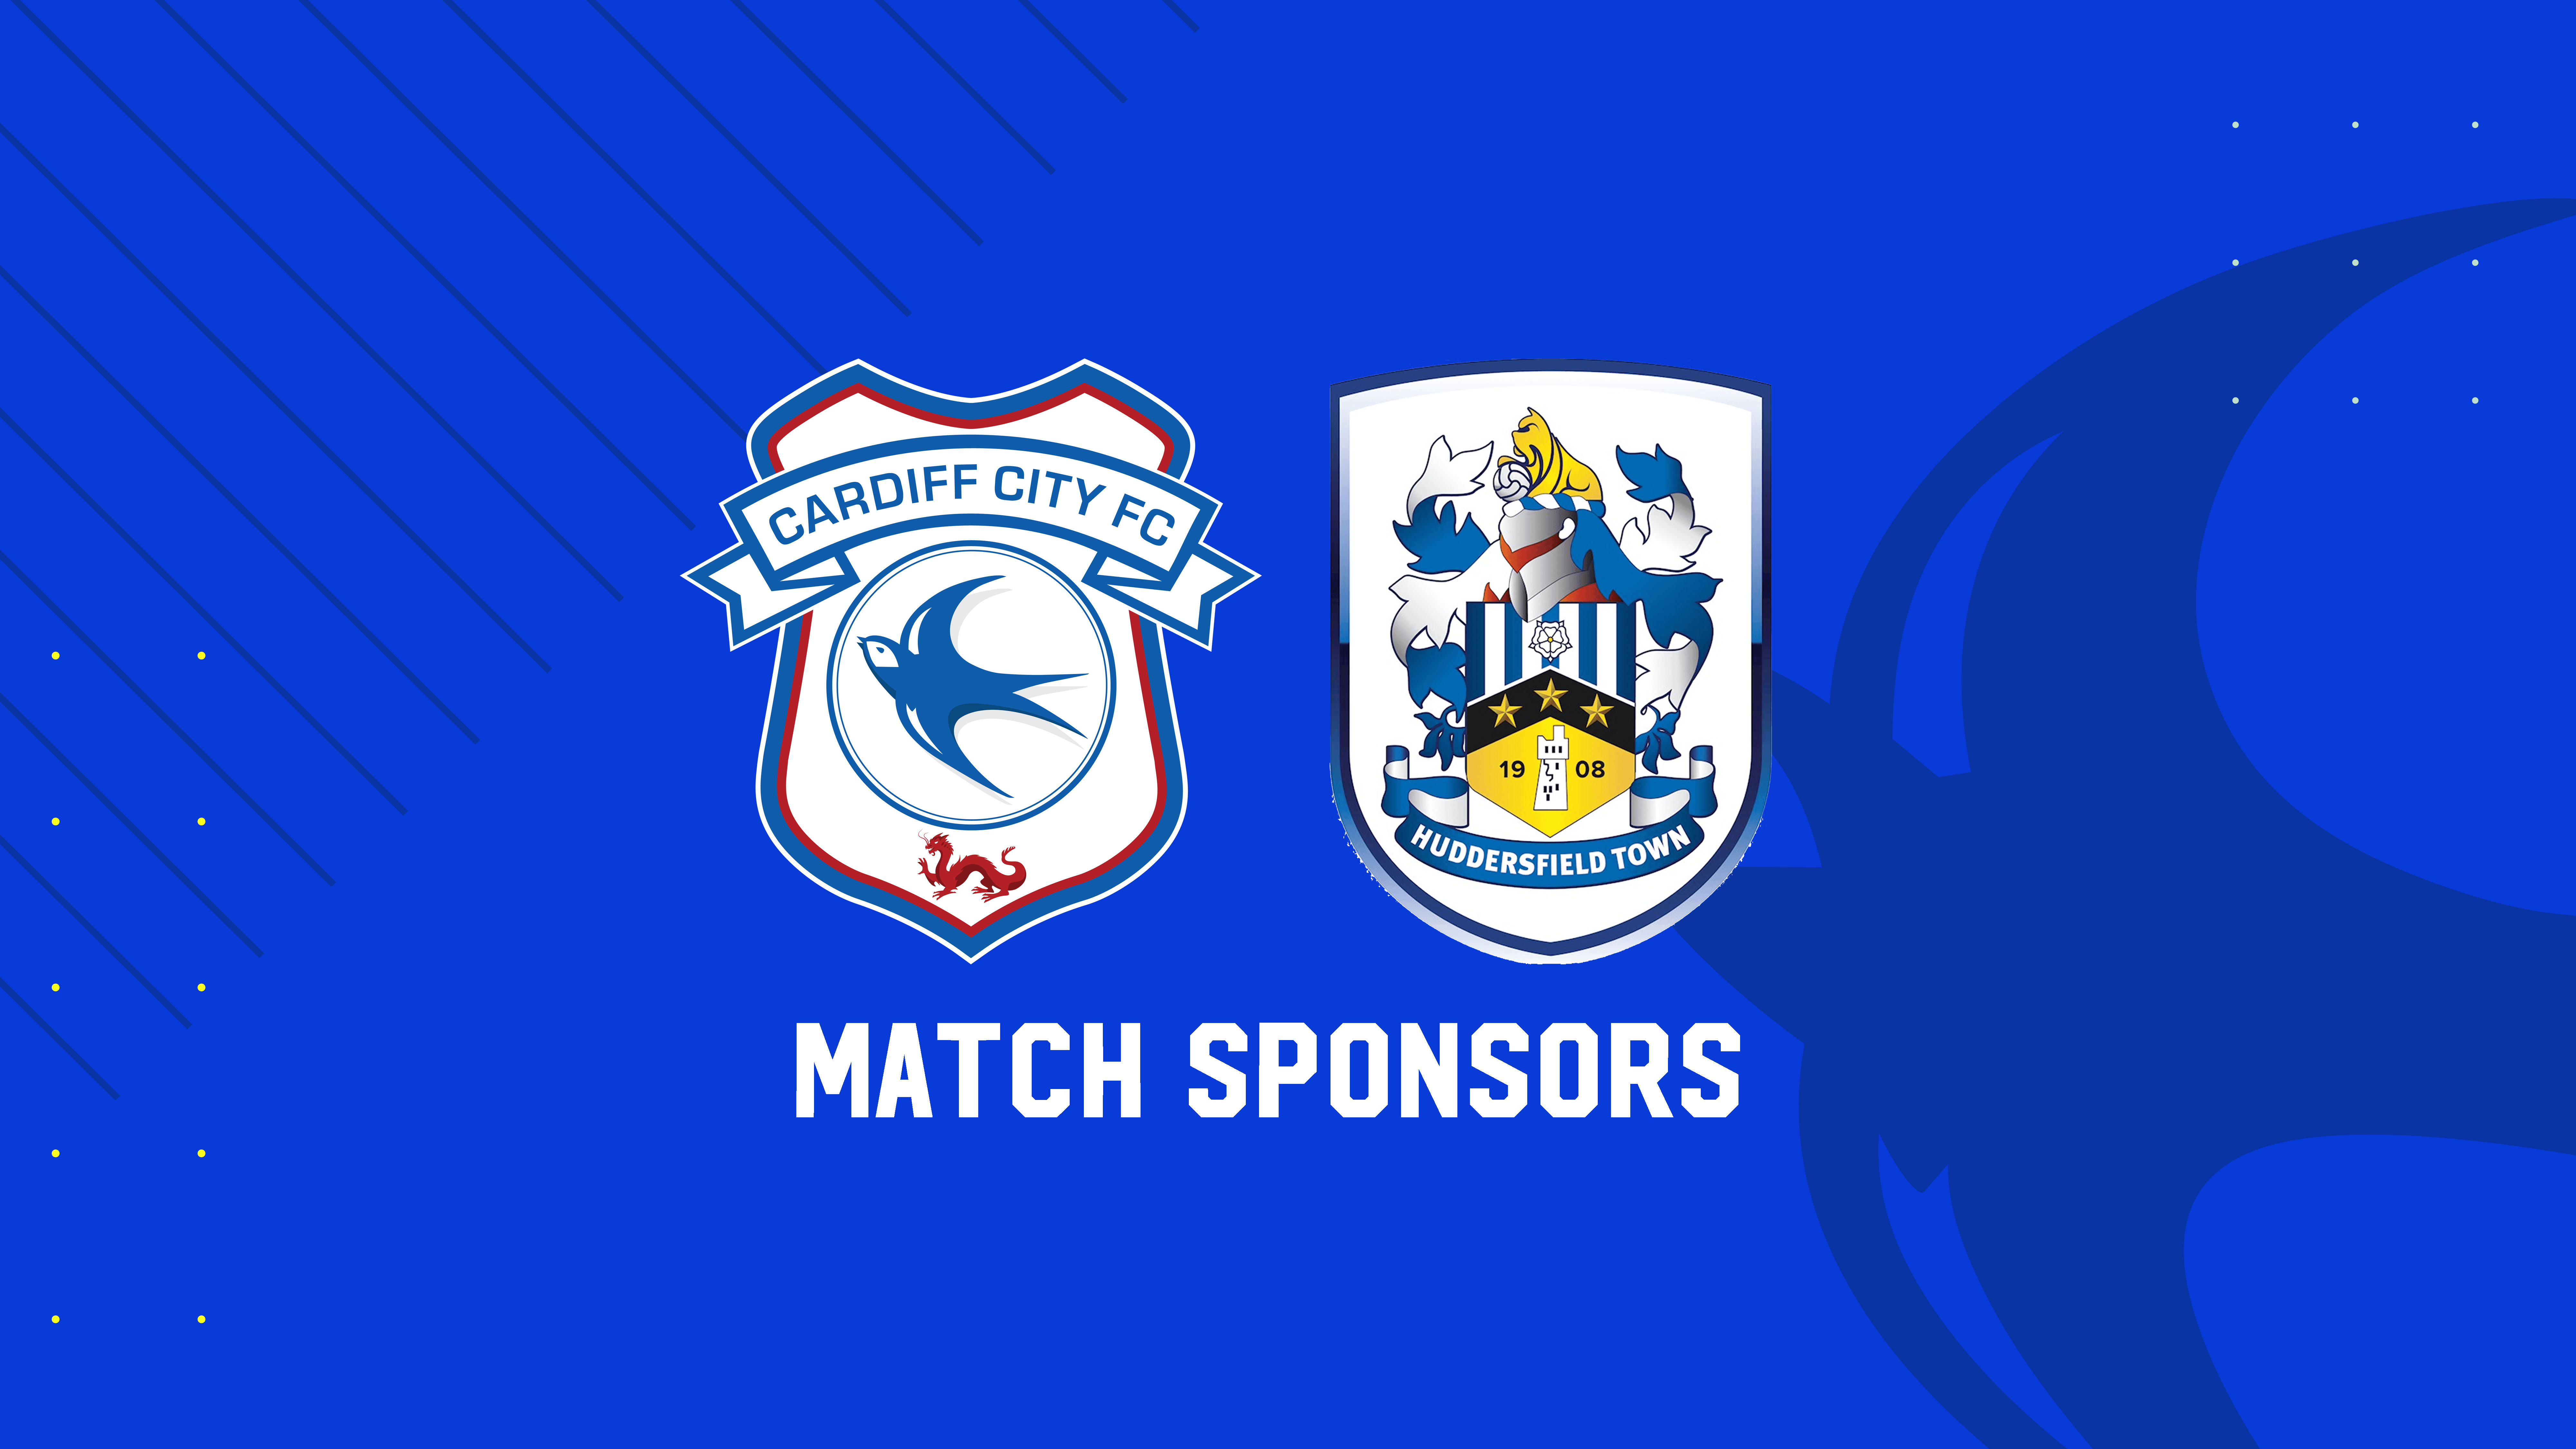 Match Sponsors: Cardiff City vs. Huddersfield Town